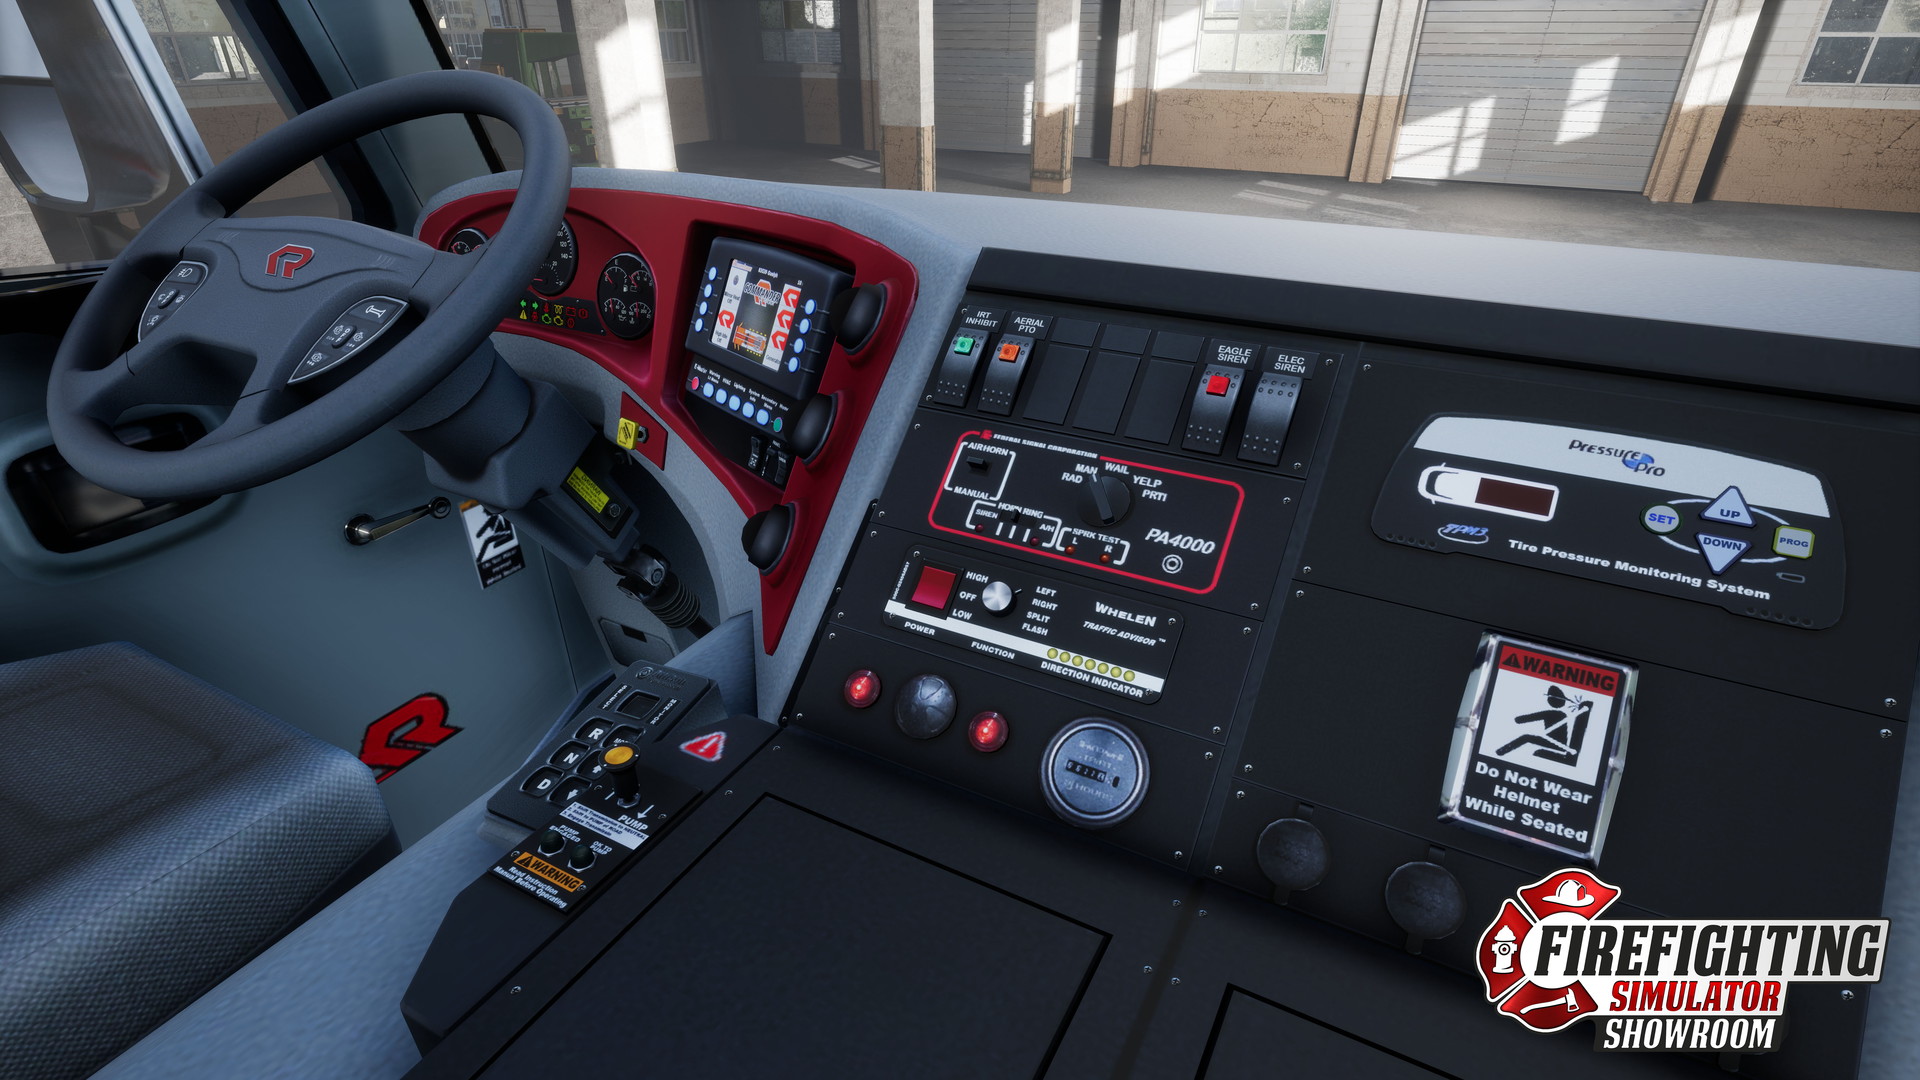 Firefighting Simulator: The Squad - screenshot 14